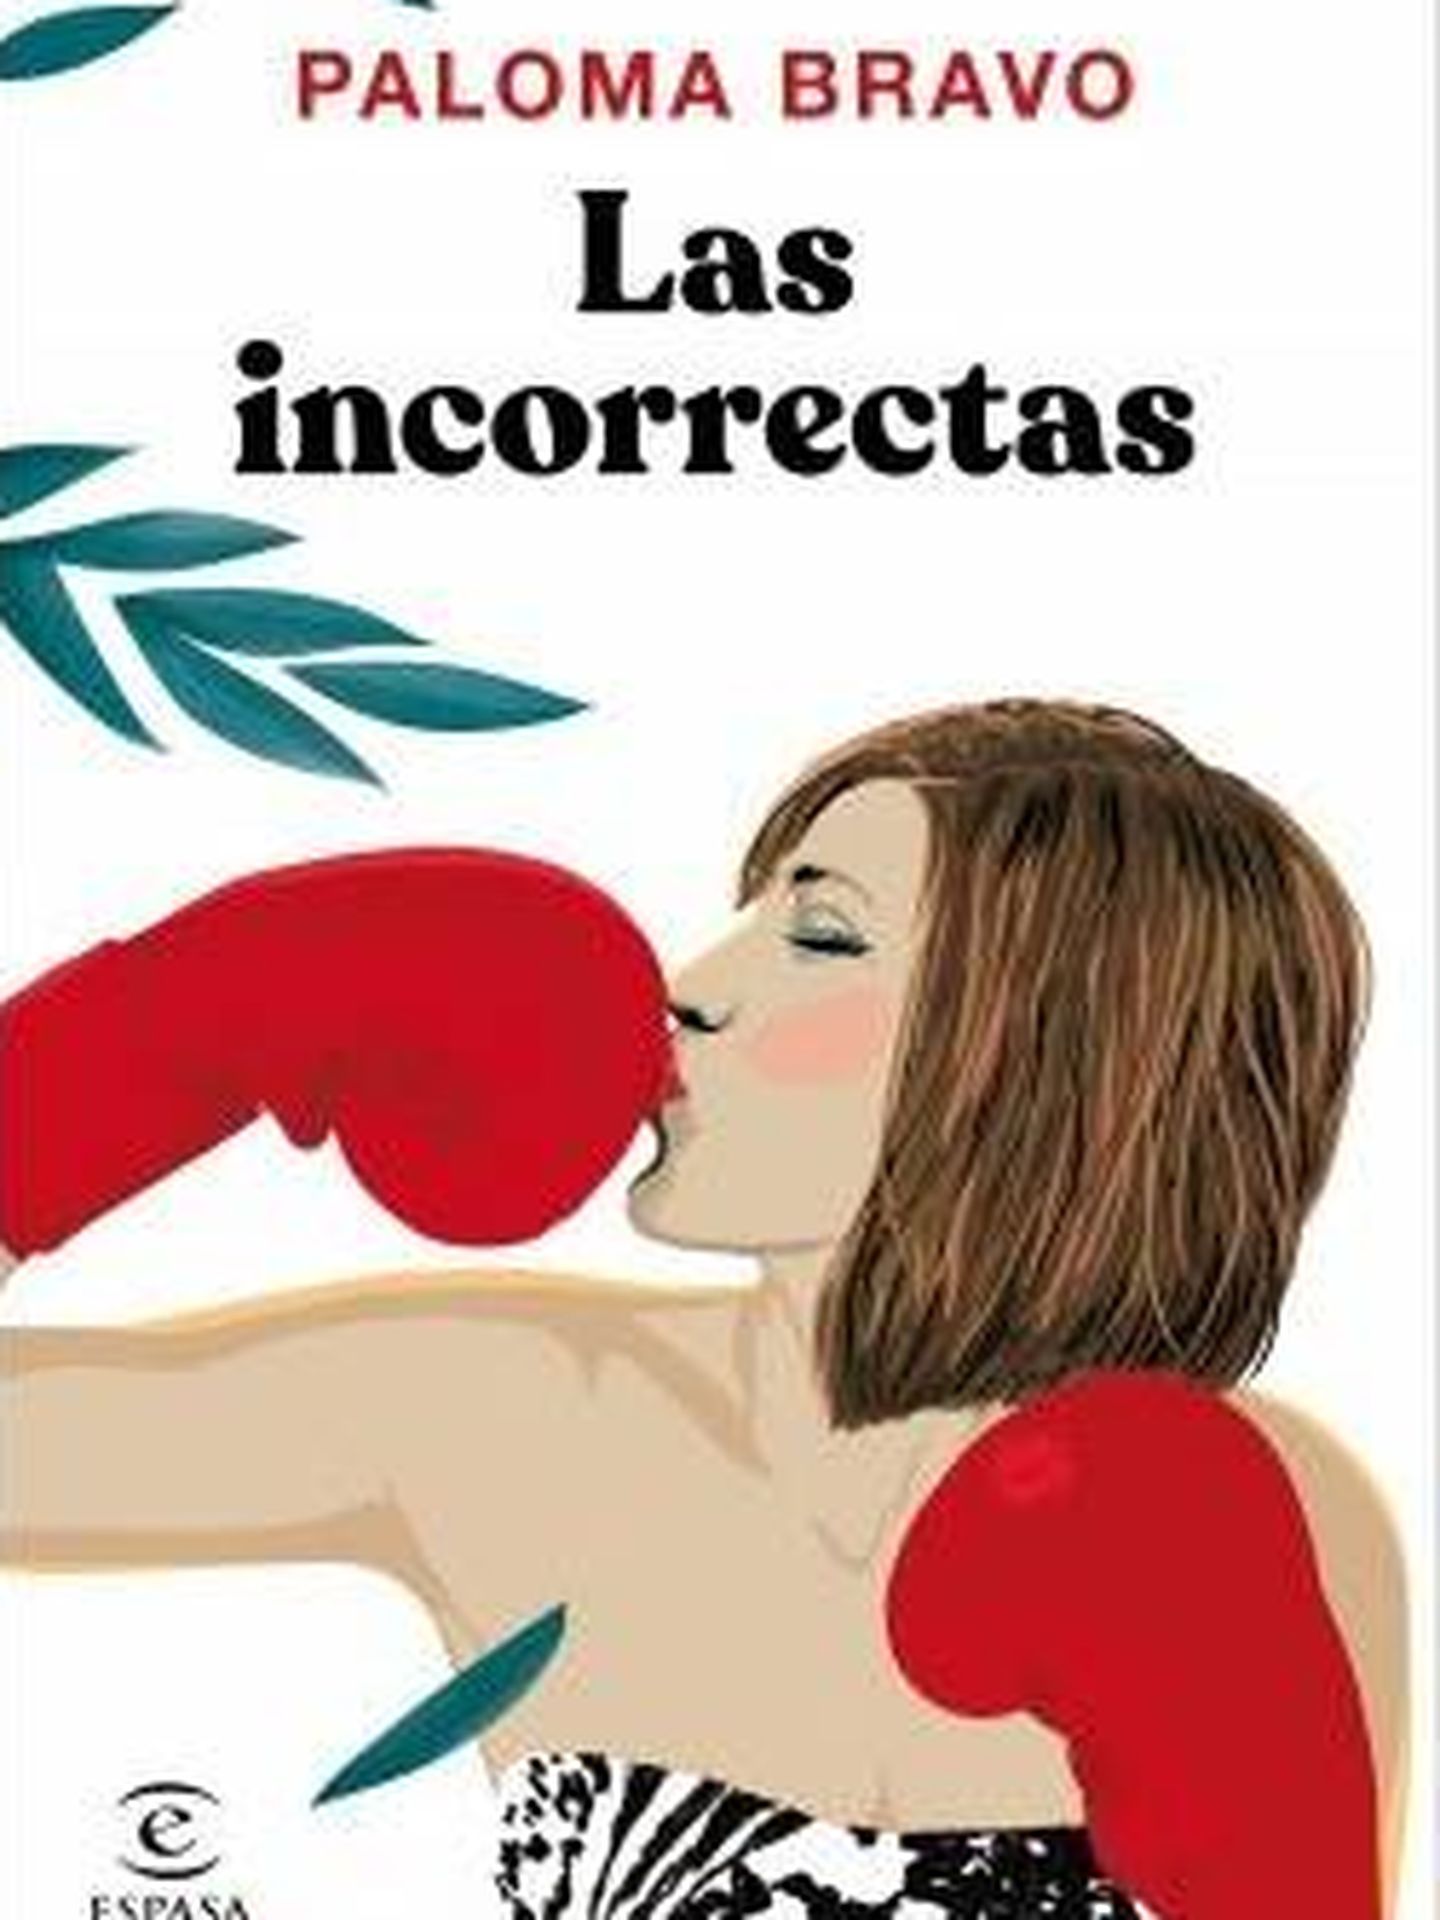 Portada de 'Las incorrectas', la última novela de Paloma Bravo. (Espasa)